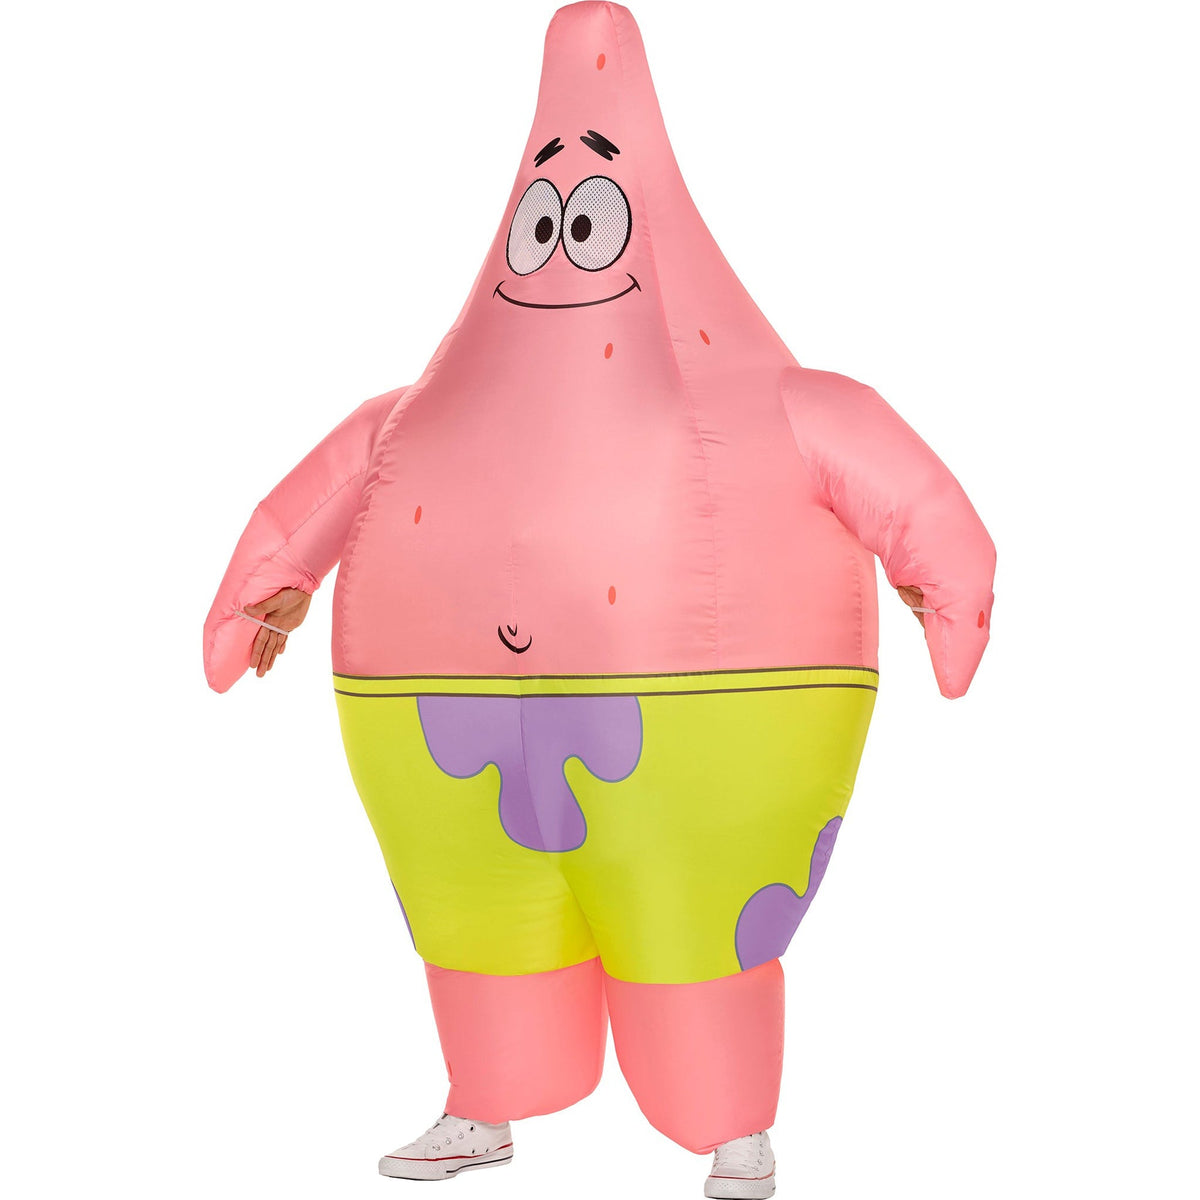 IN SPIRIT DESIGNS Costumes Inflatable Patrick Costume for Kids, SpongeBob SquarePants